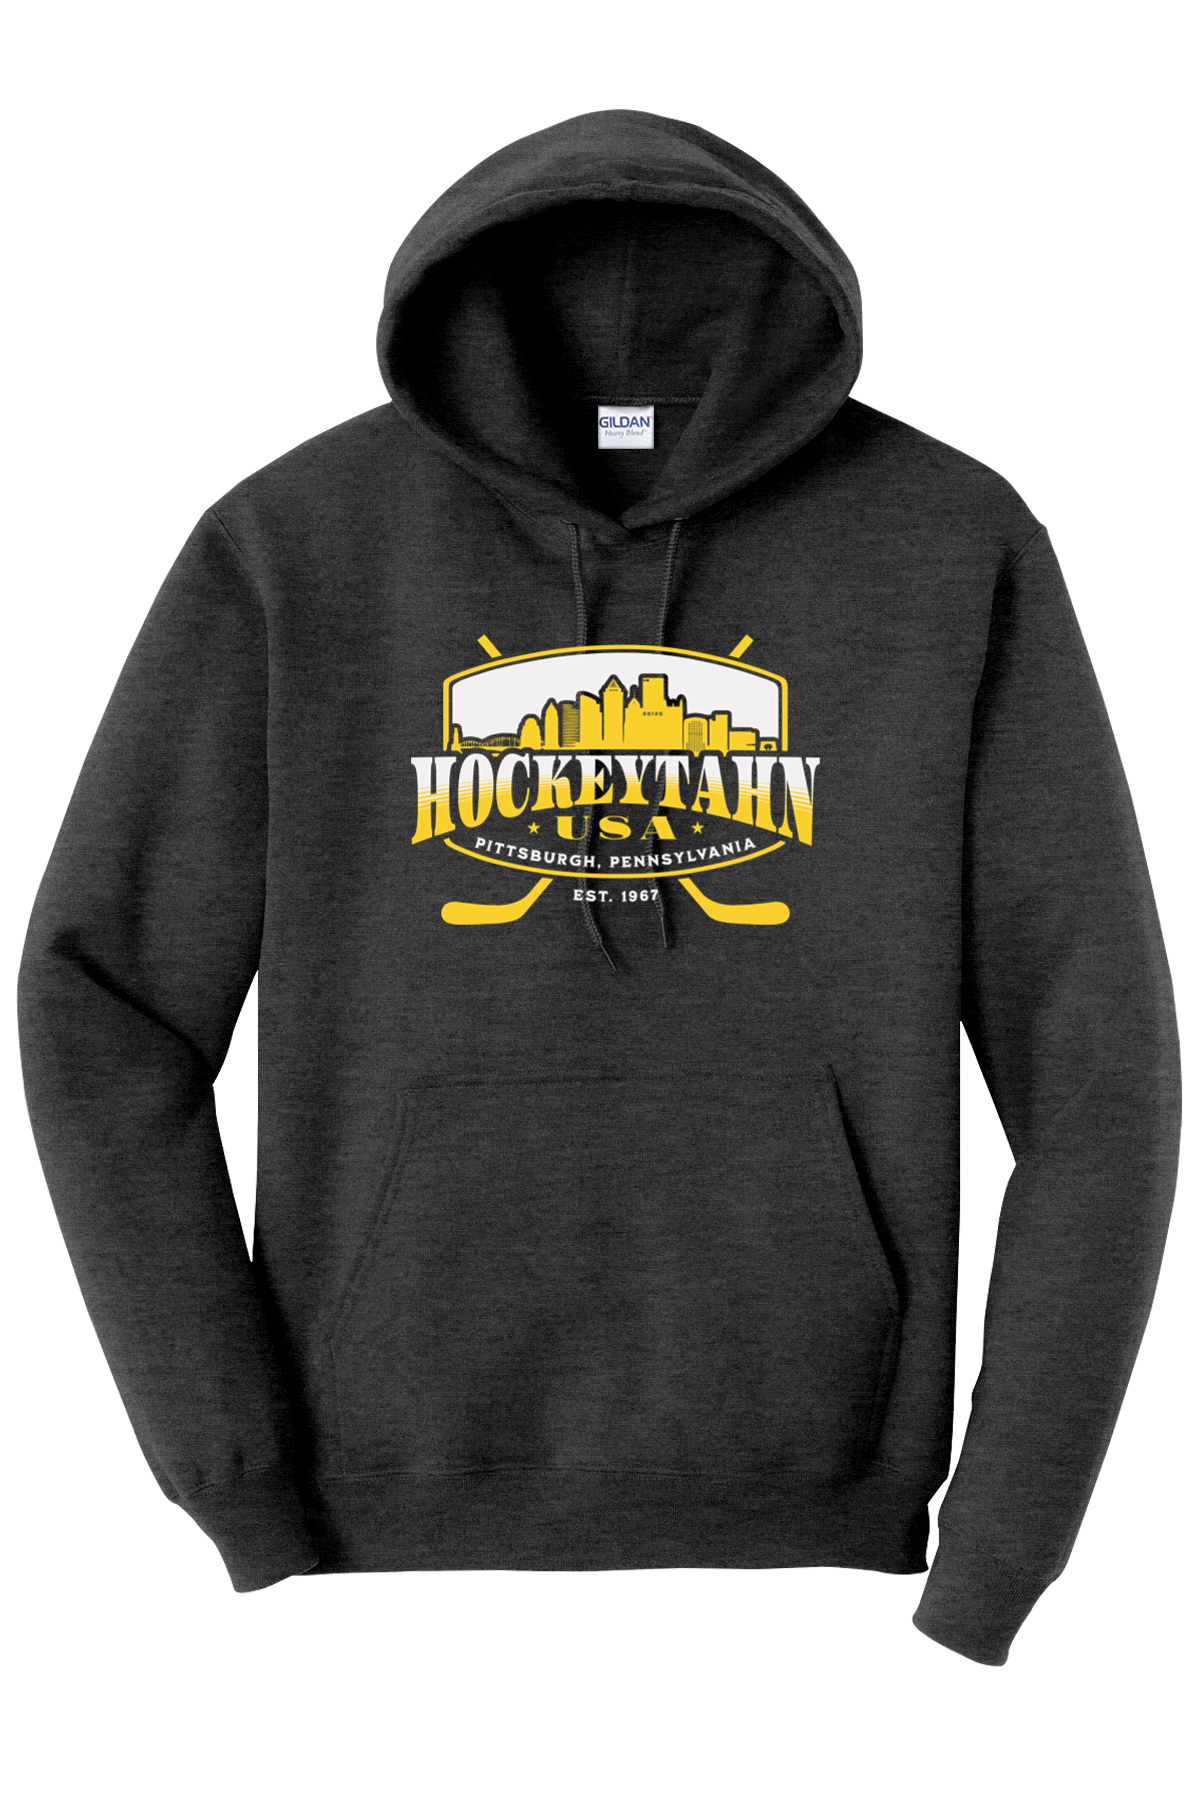 Hockeytahn USA - Hoodie - Yinzylvania